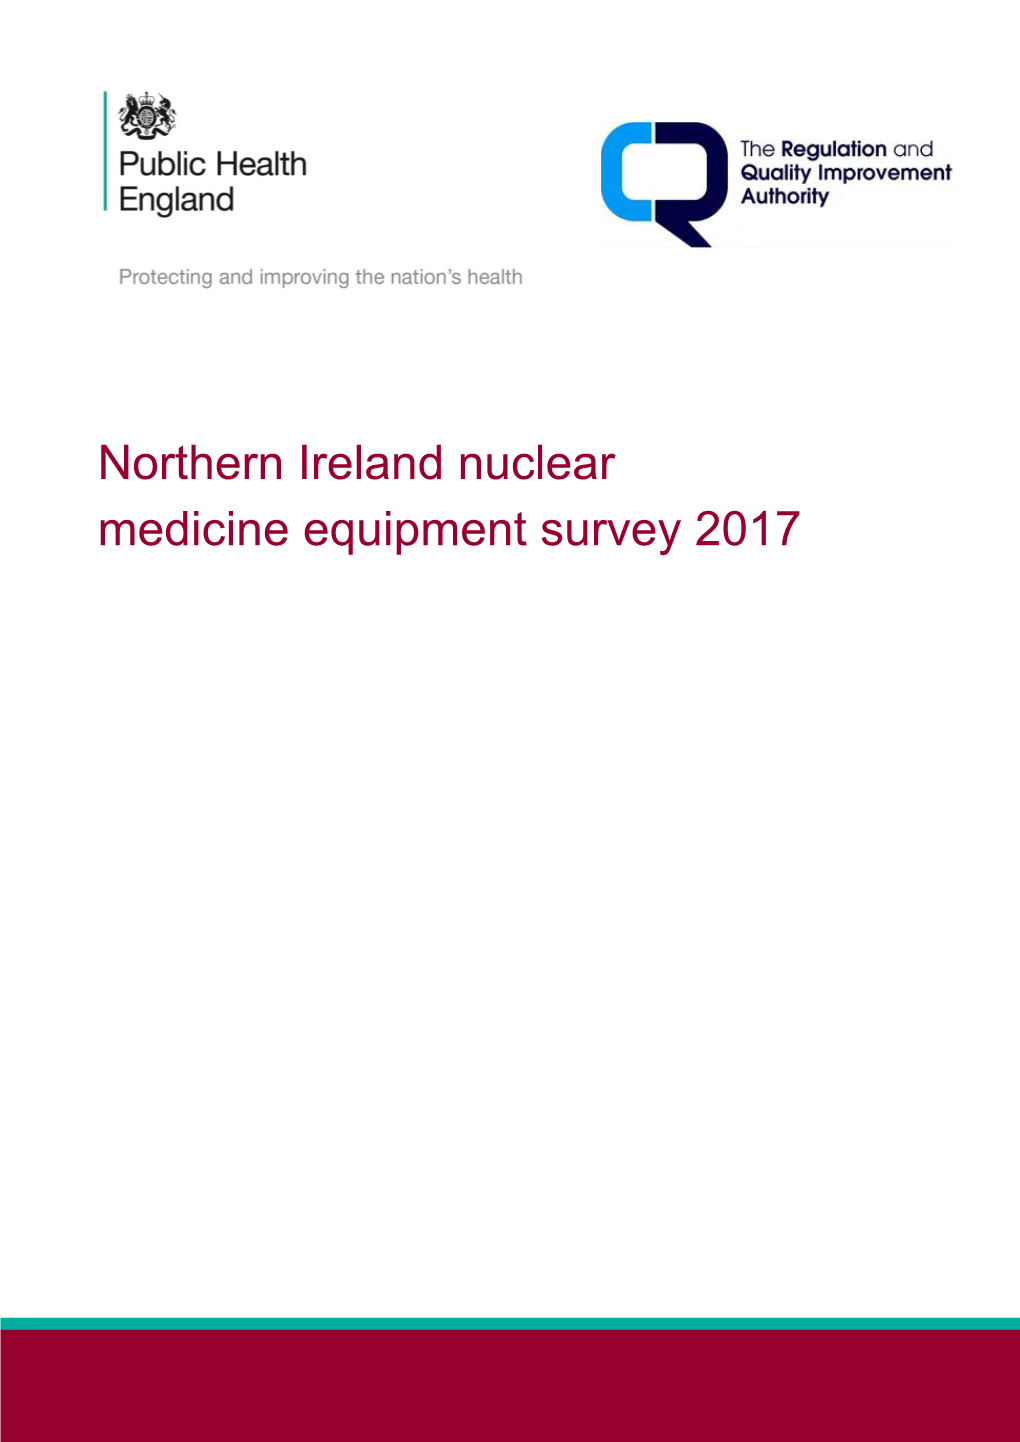 Northern Ireland Nuclear Medicine Equipment Survey, 2017